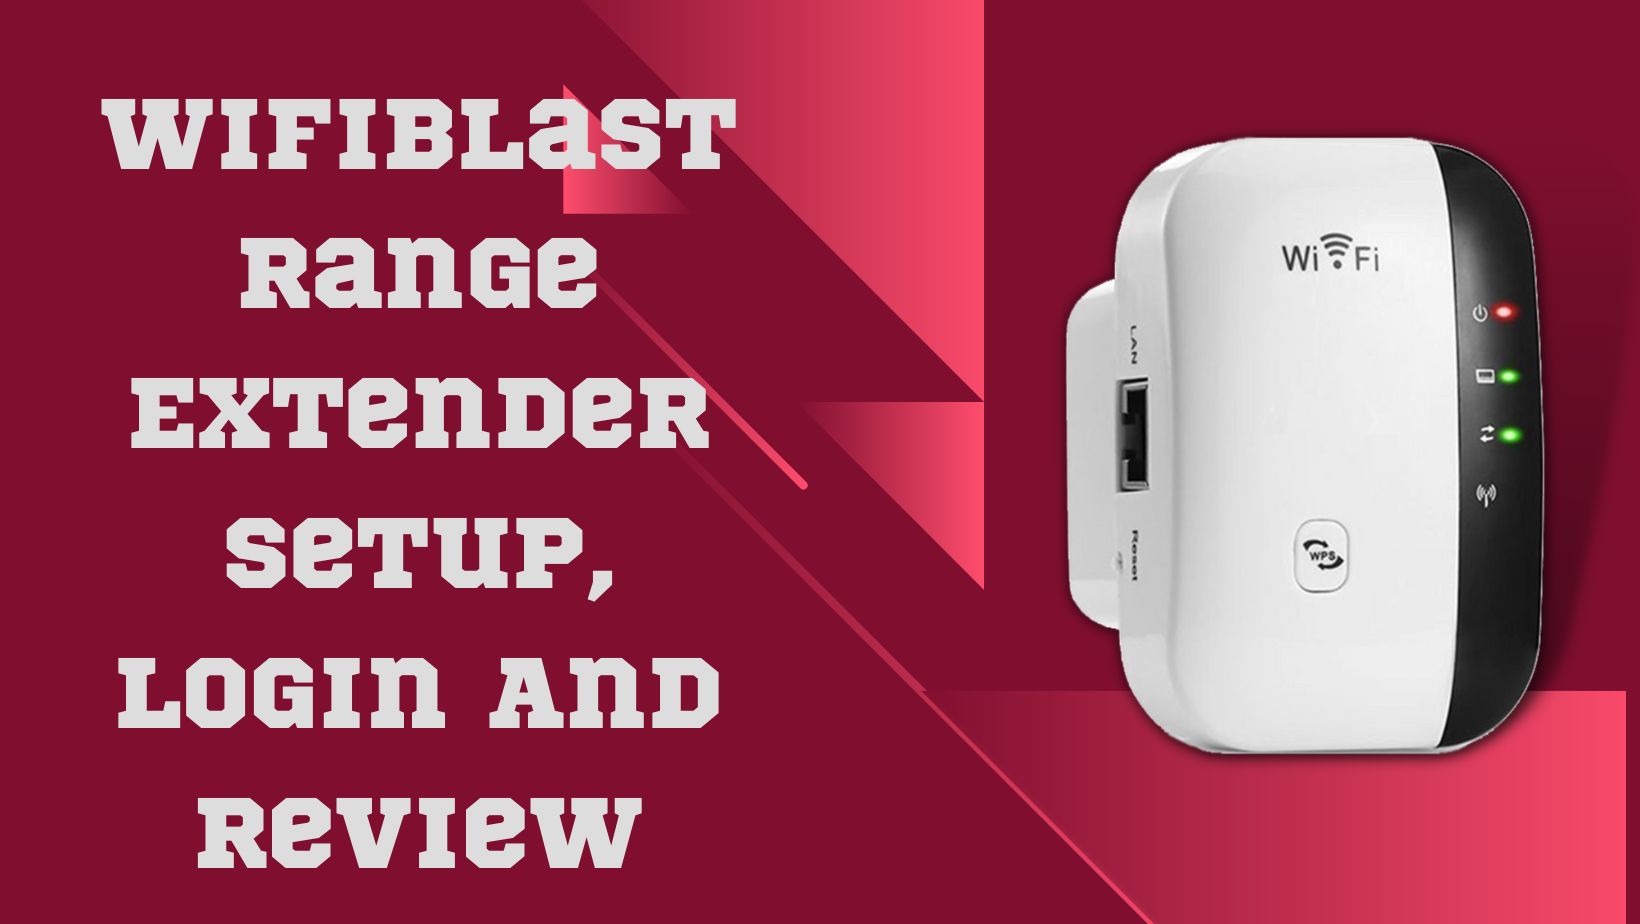 Wifiblast Range Extender Setup, Login And Review